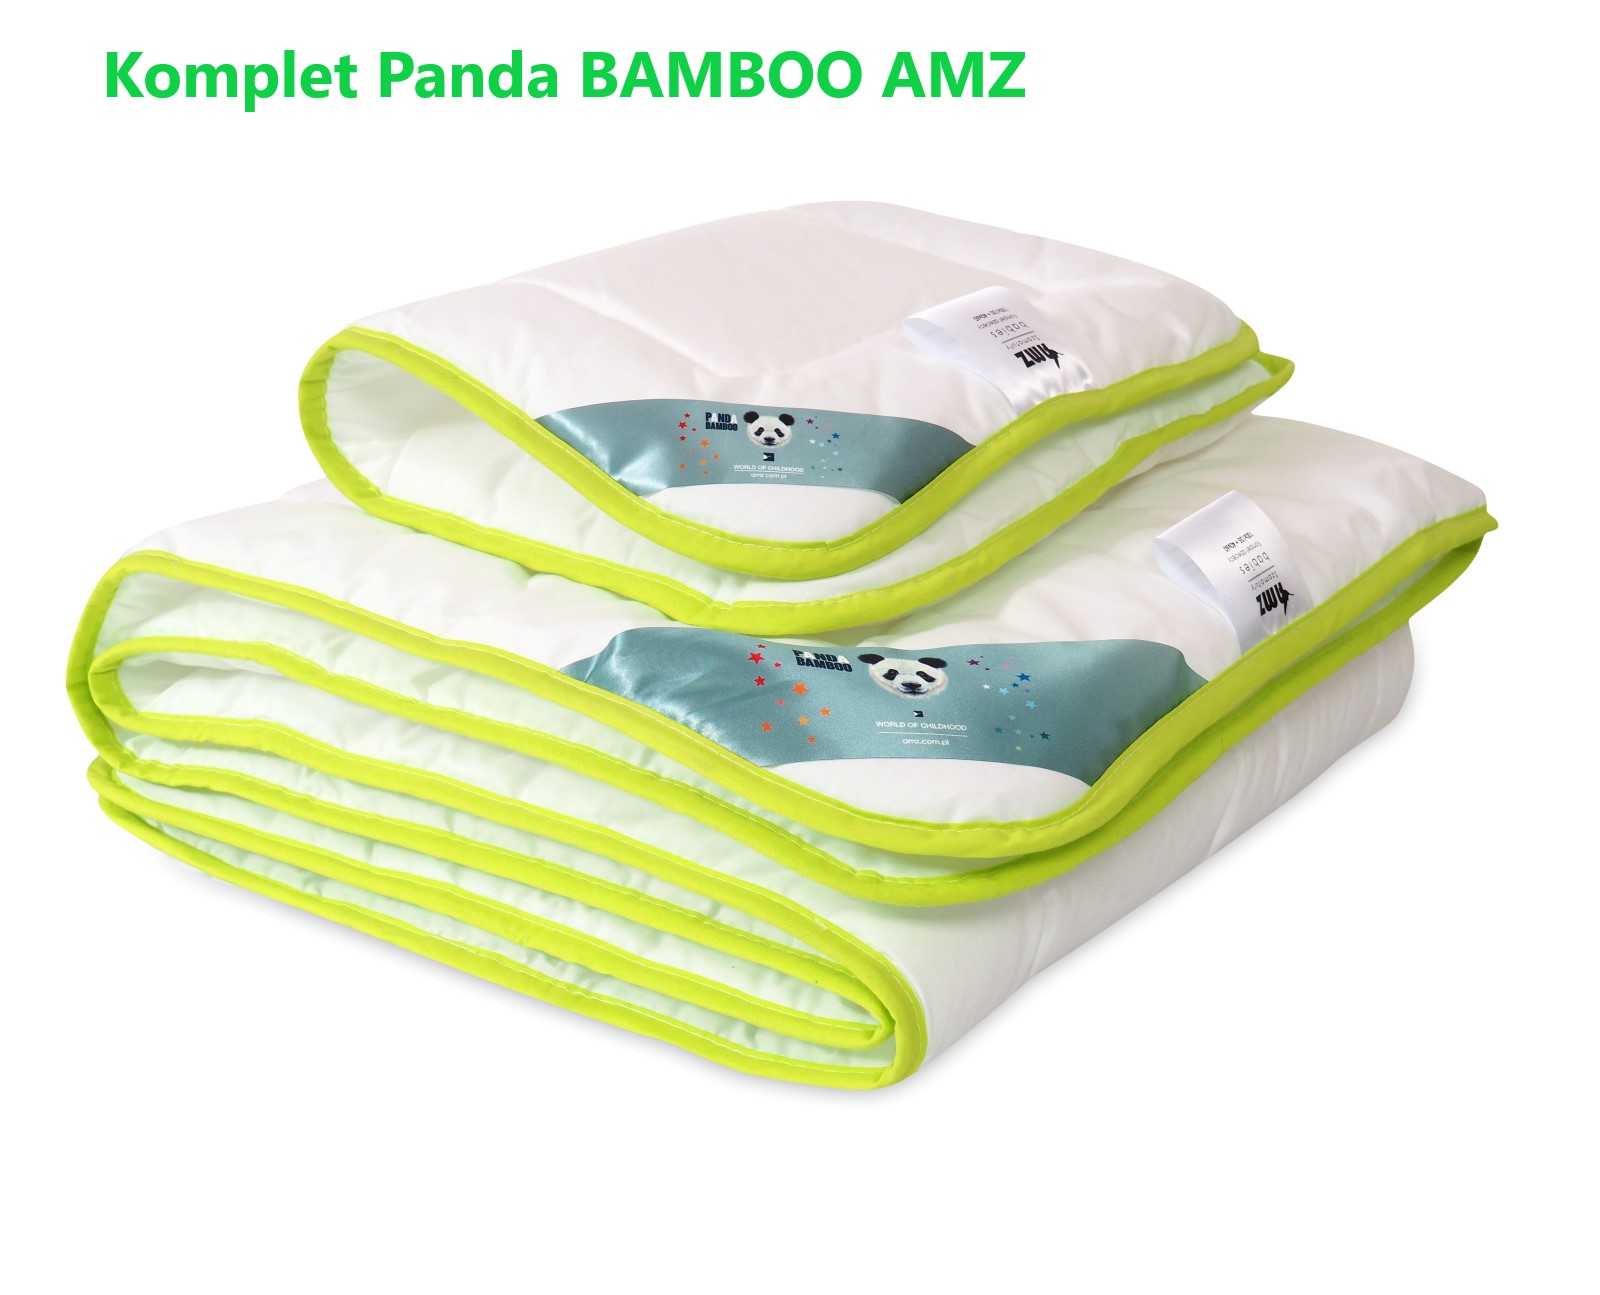 KOMPLET PANDA BAMBOO AMZ